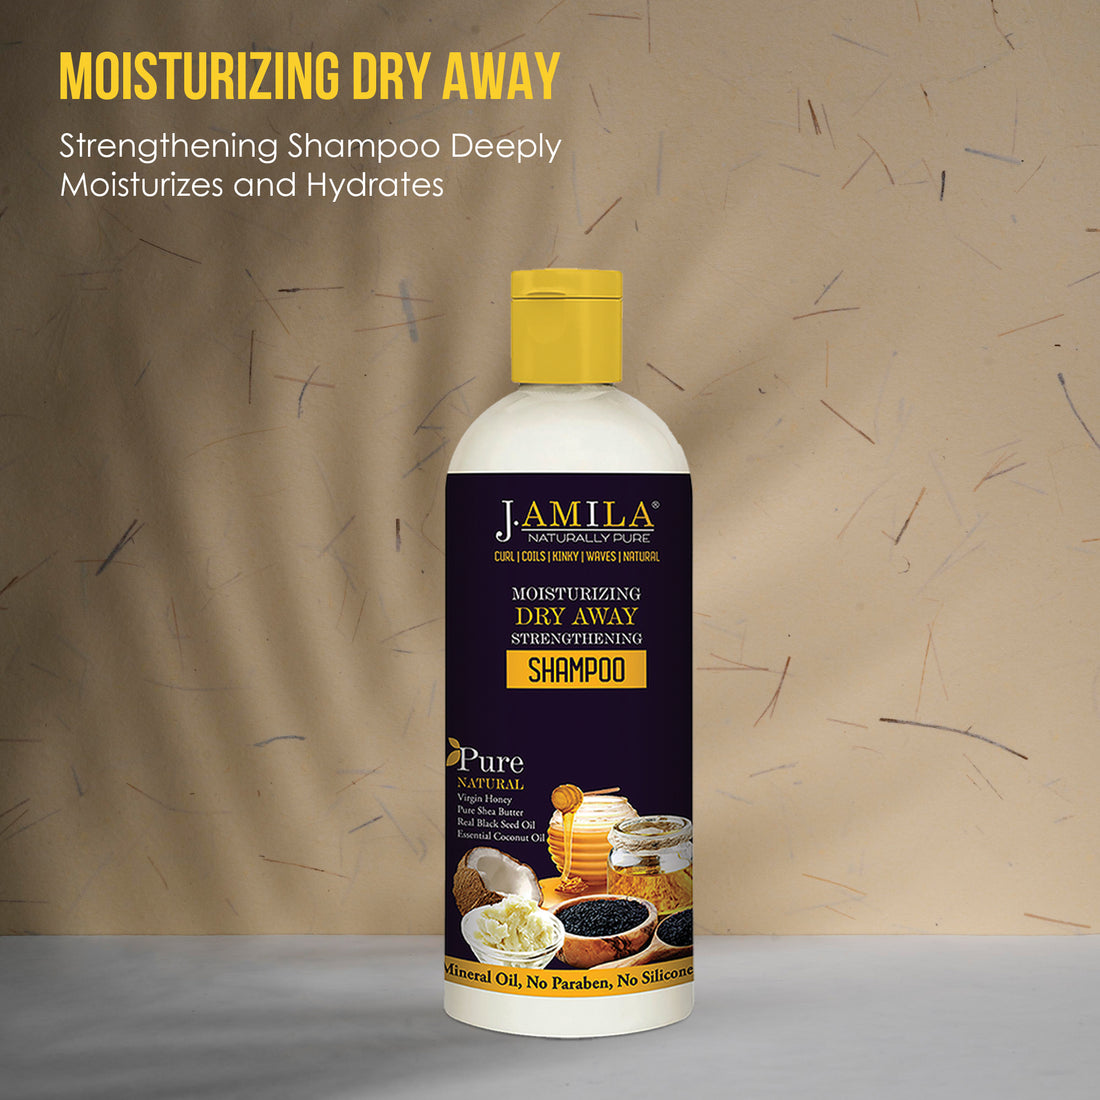 J. AMILA Naturally Pure Moisturizing Dry Away Shampoo (12oz)